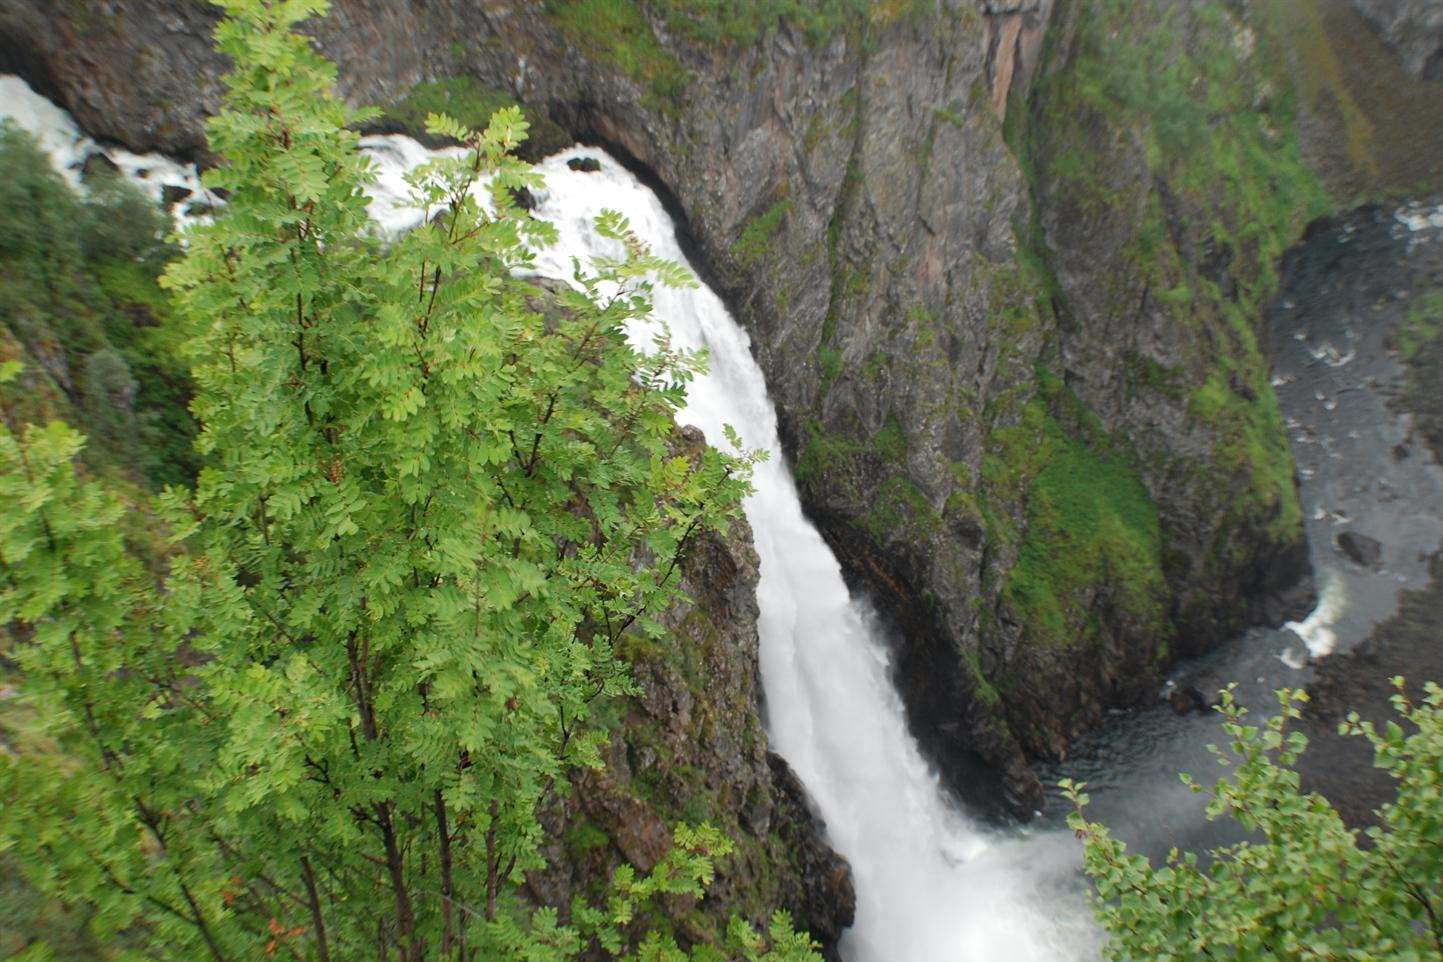 The Voringfoss Waterfall in Eidfjord